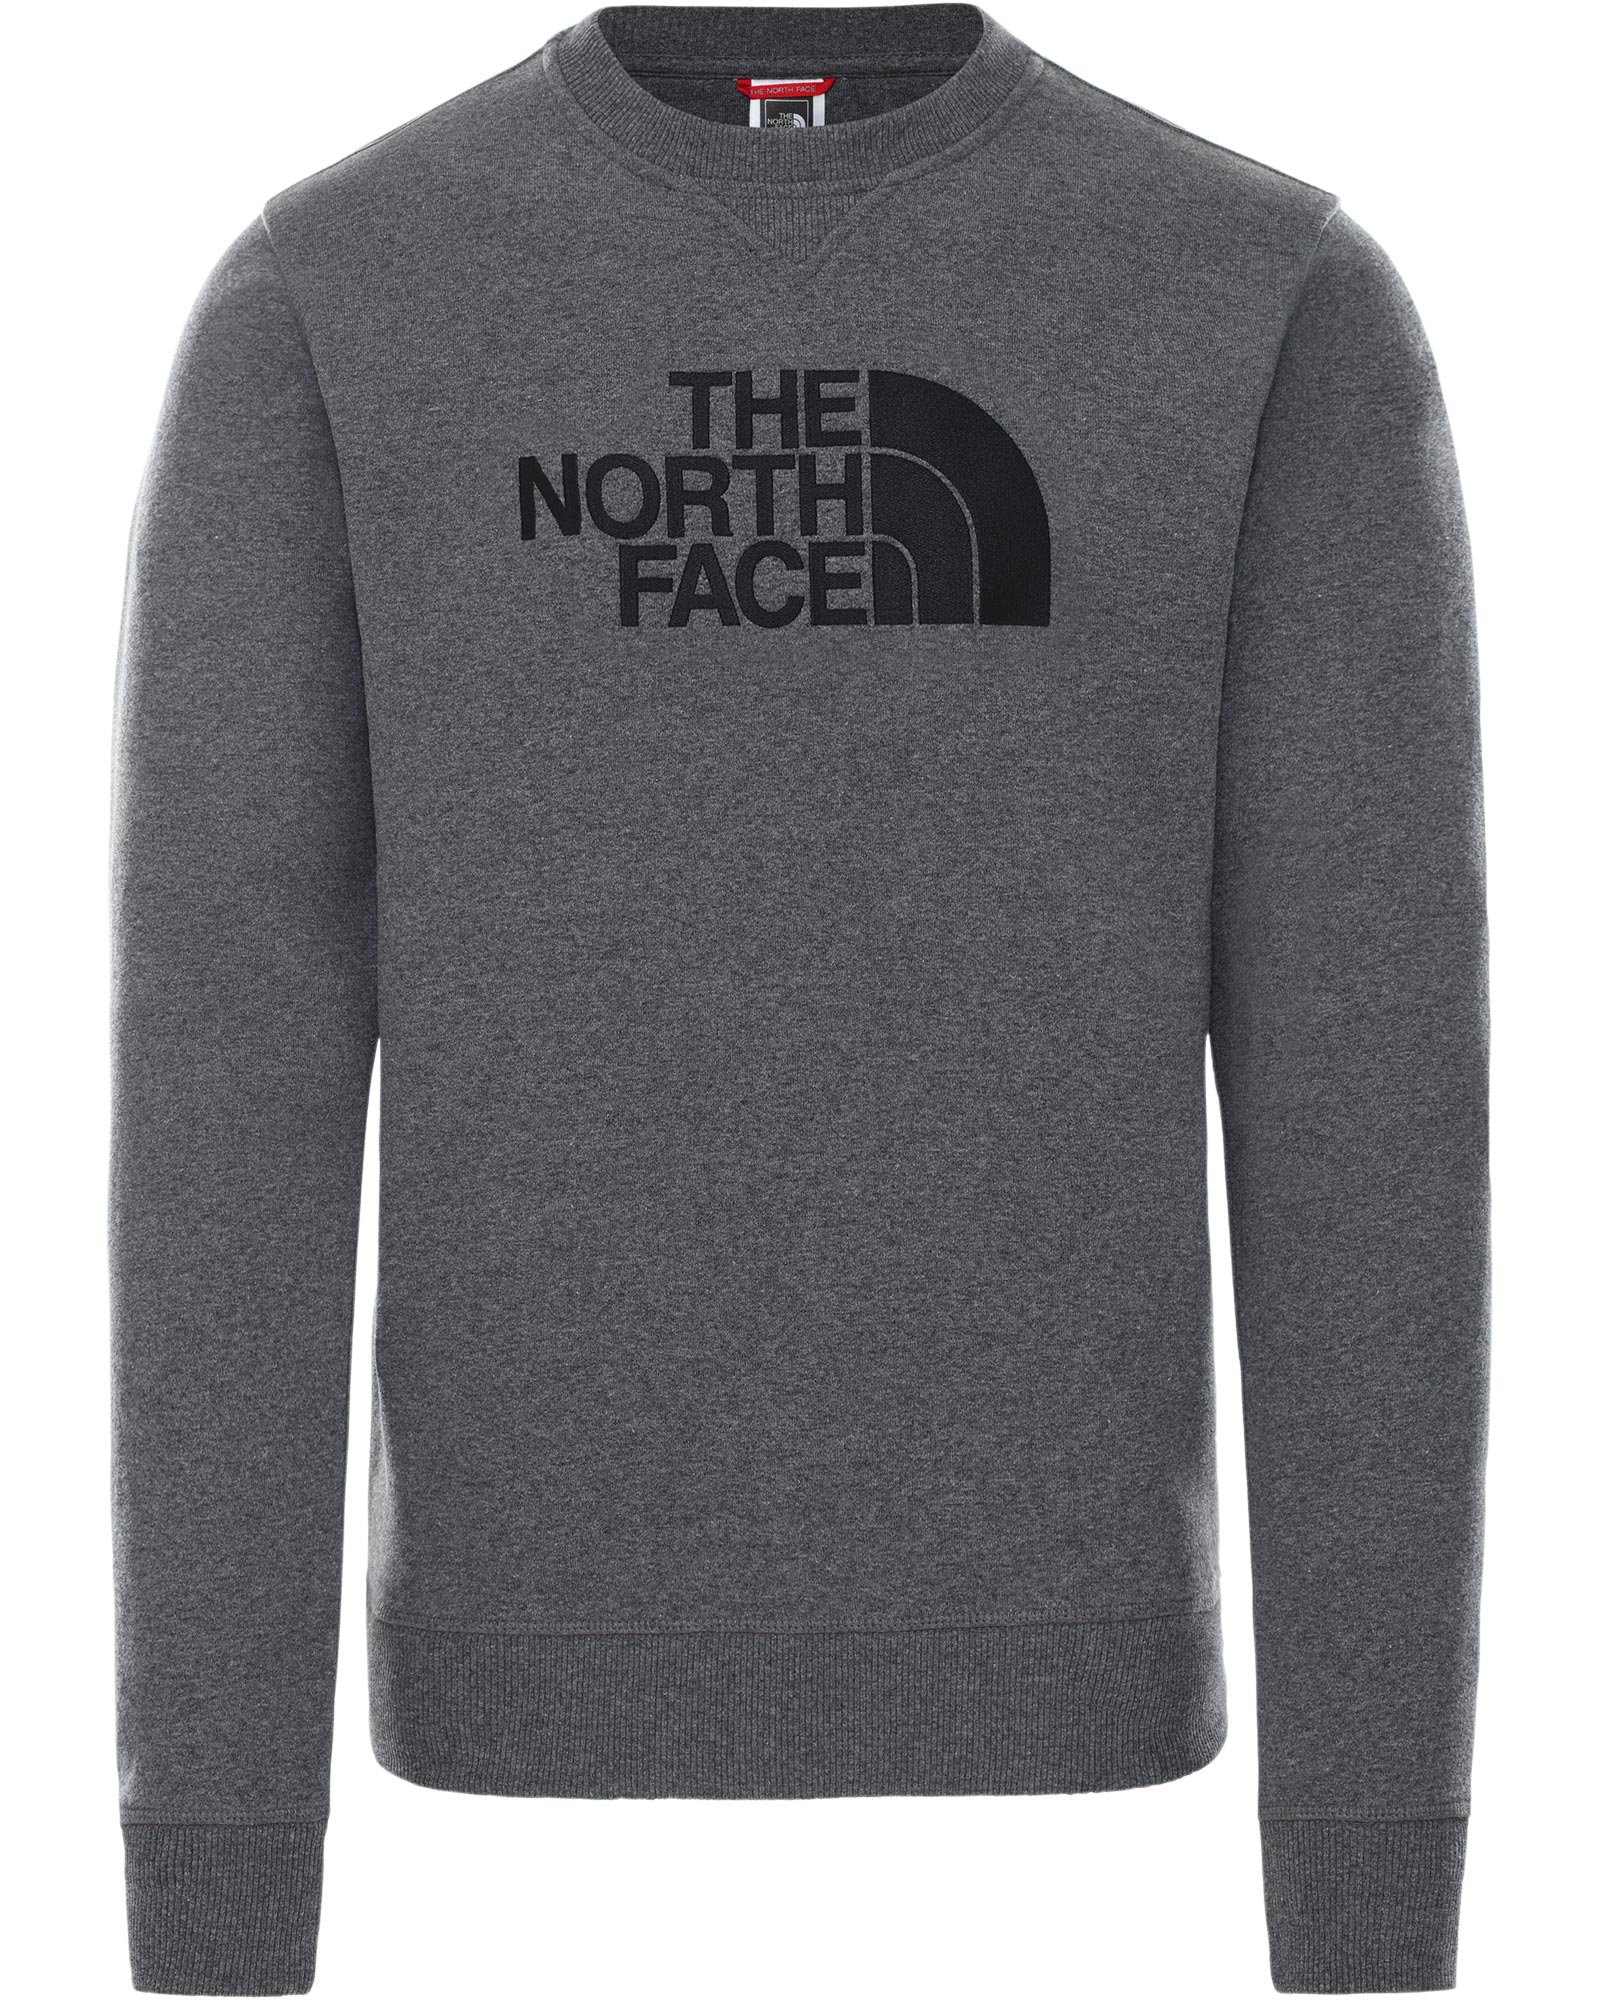 The North Face Drew Peak Men’s Crew - TNF Medium Grey Heather XXL